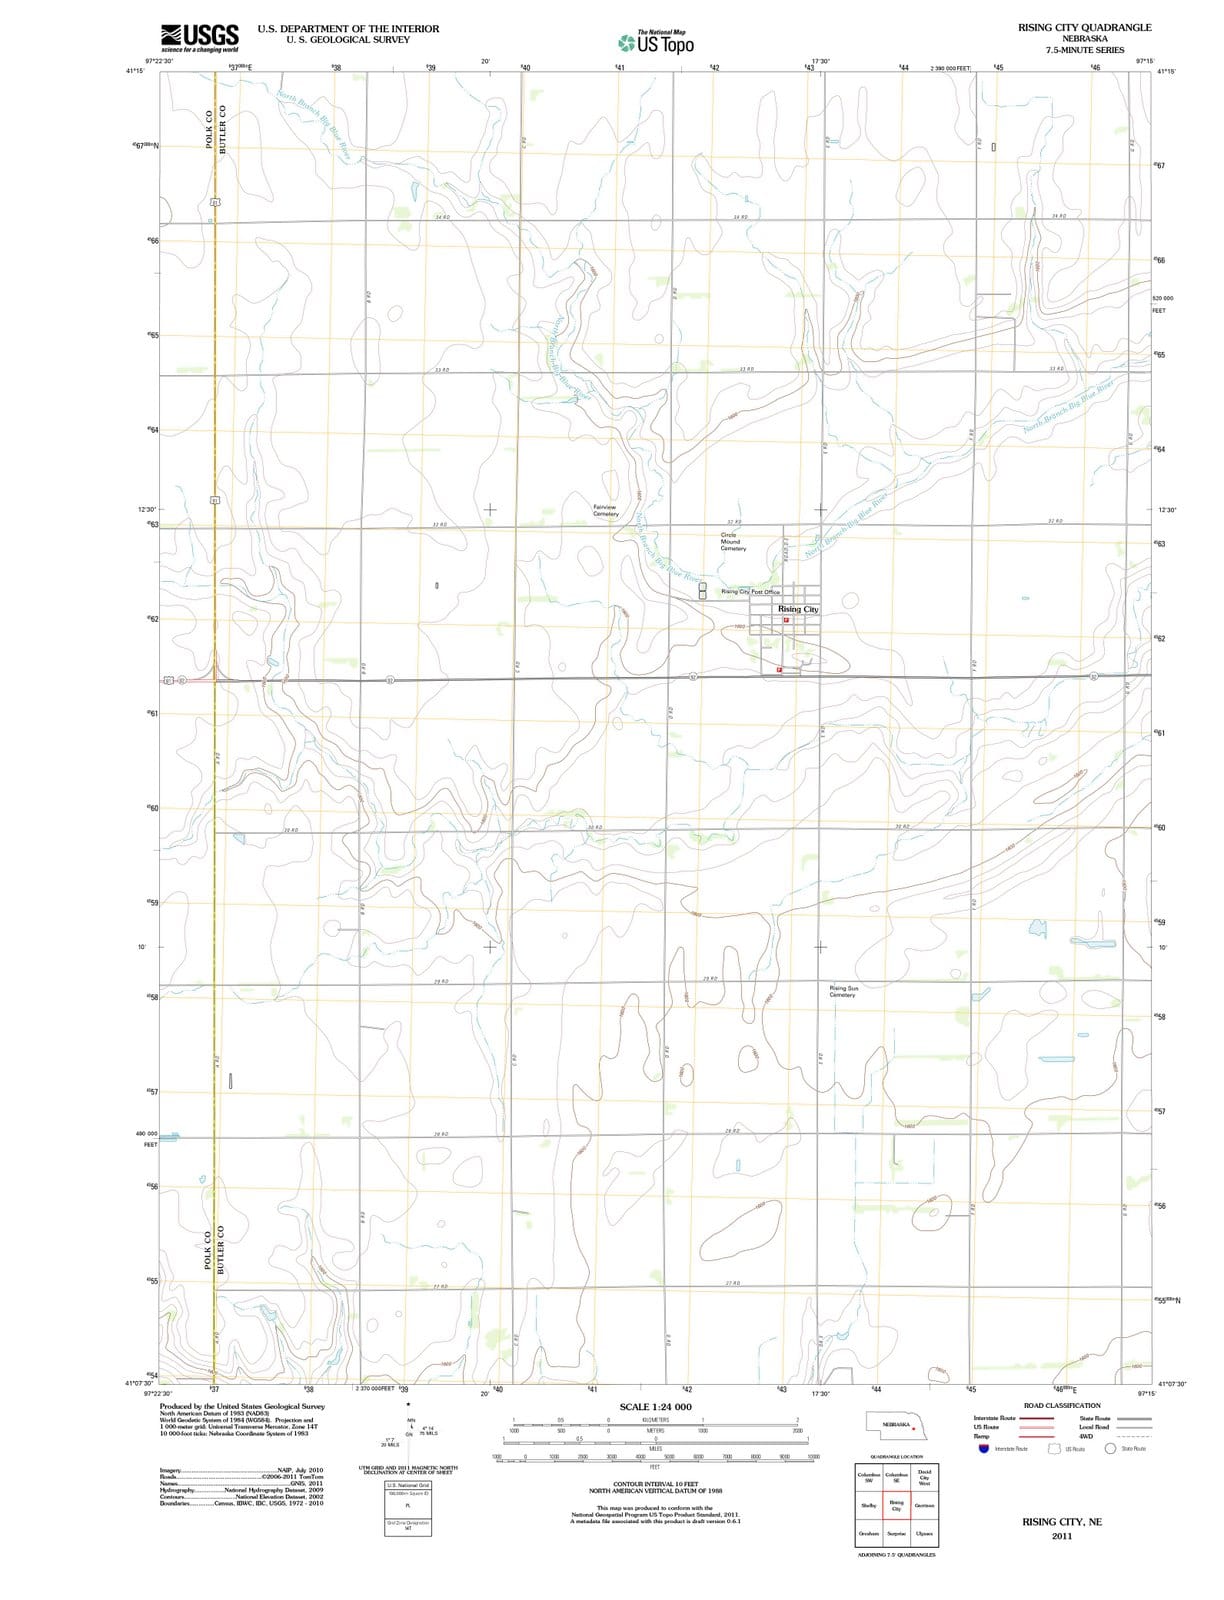 2011 Rising City, NE - Nebraska - USGS Topographic Map